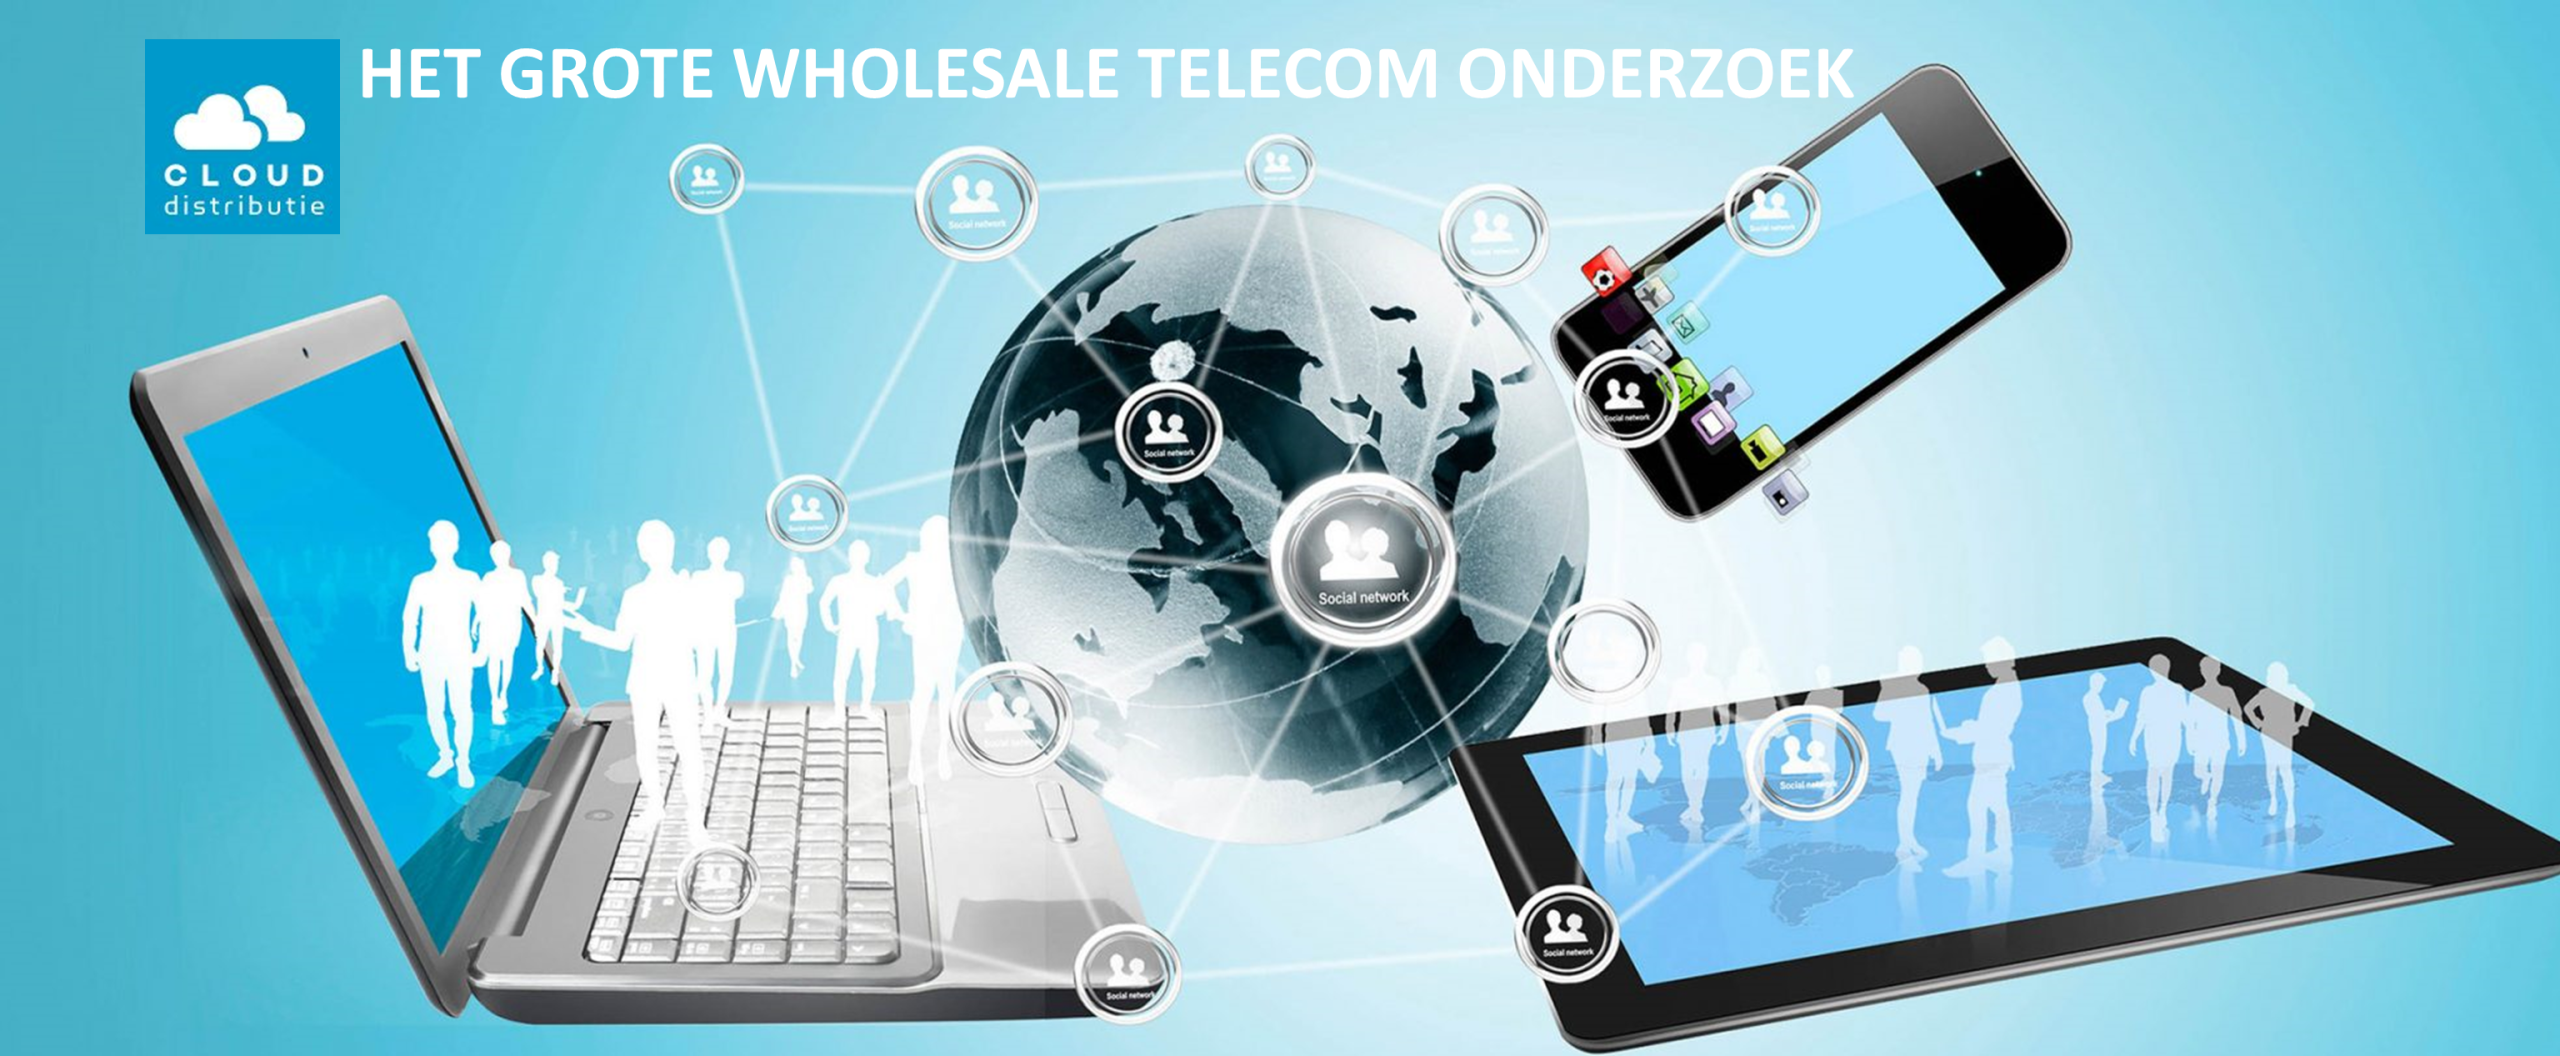 2020 Wholesale Telecom onderzoek